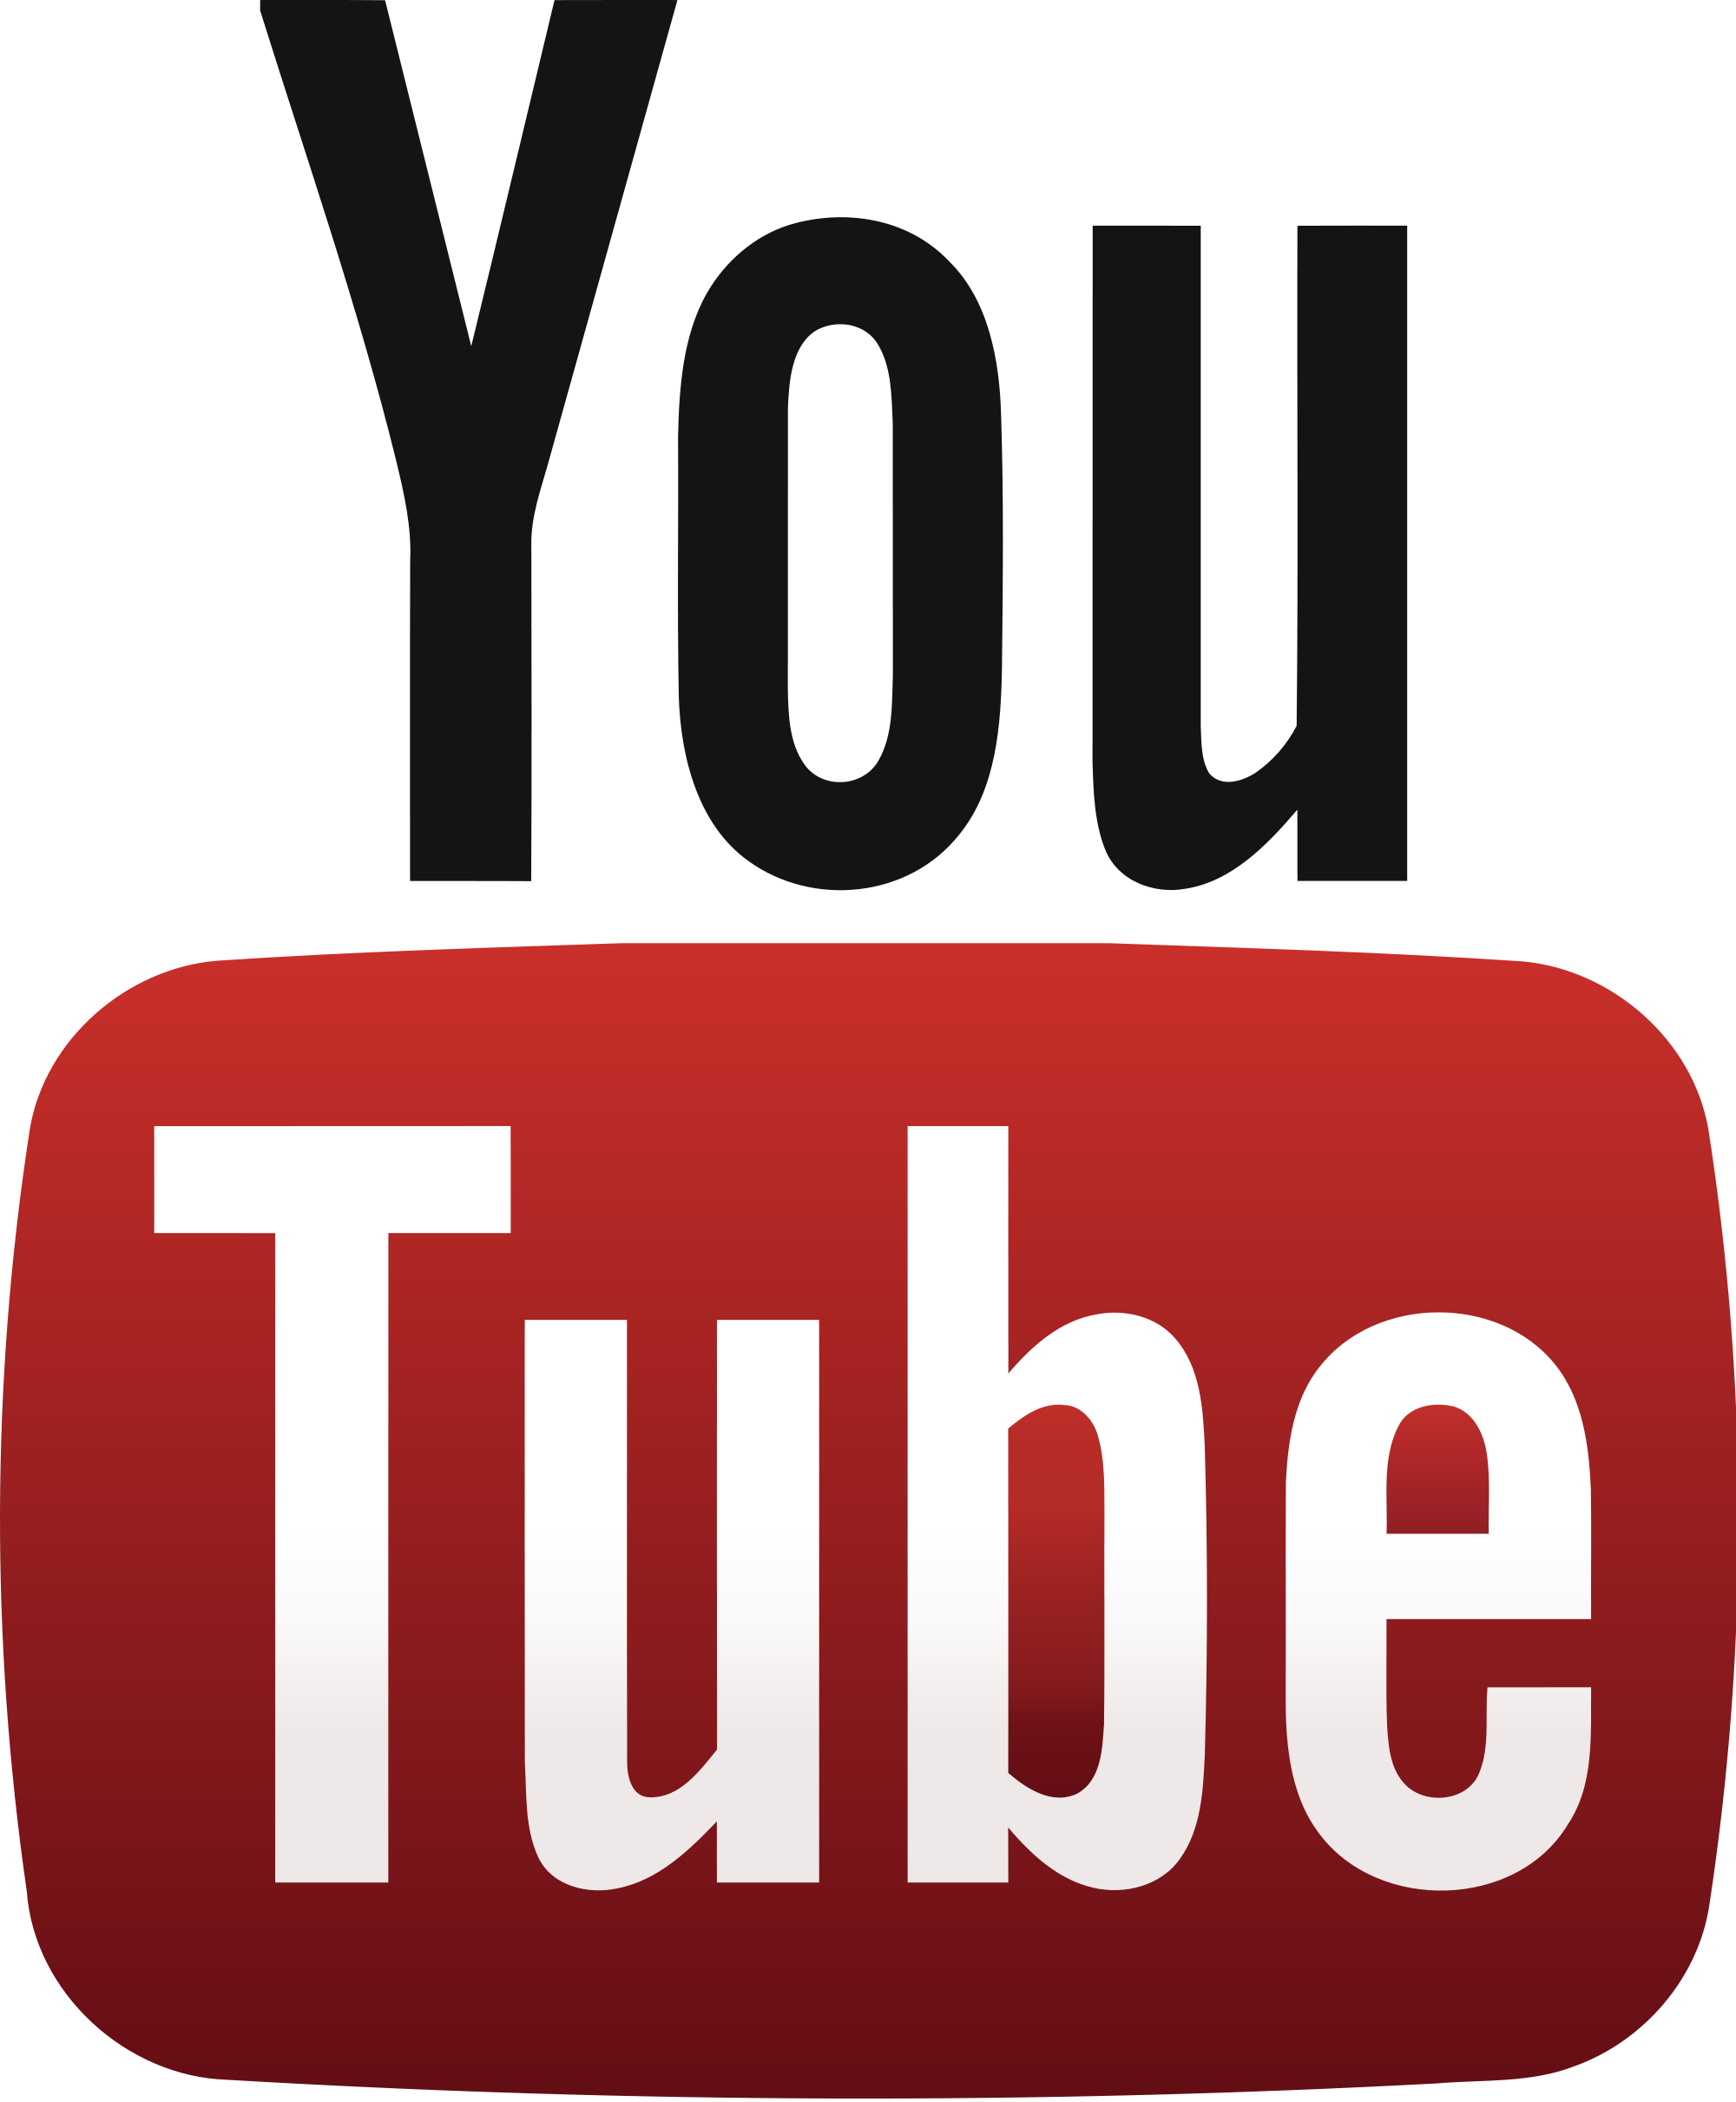 youtube-logo-png-6